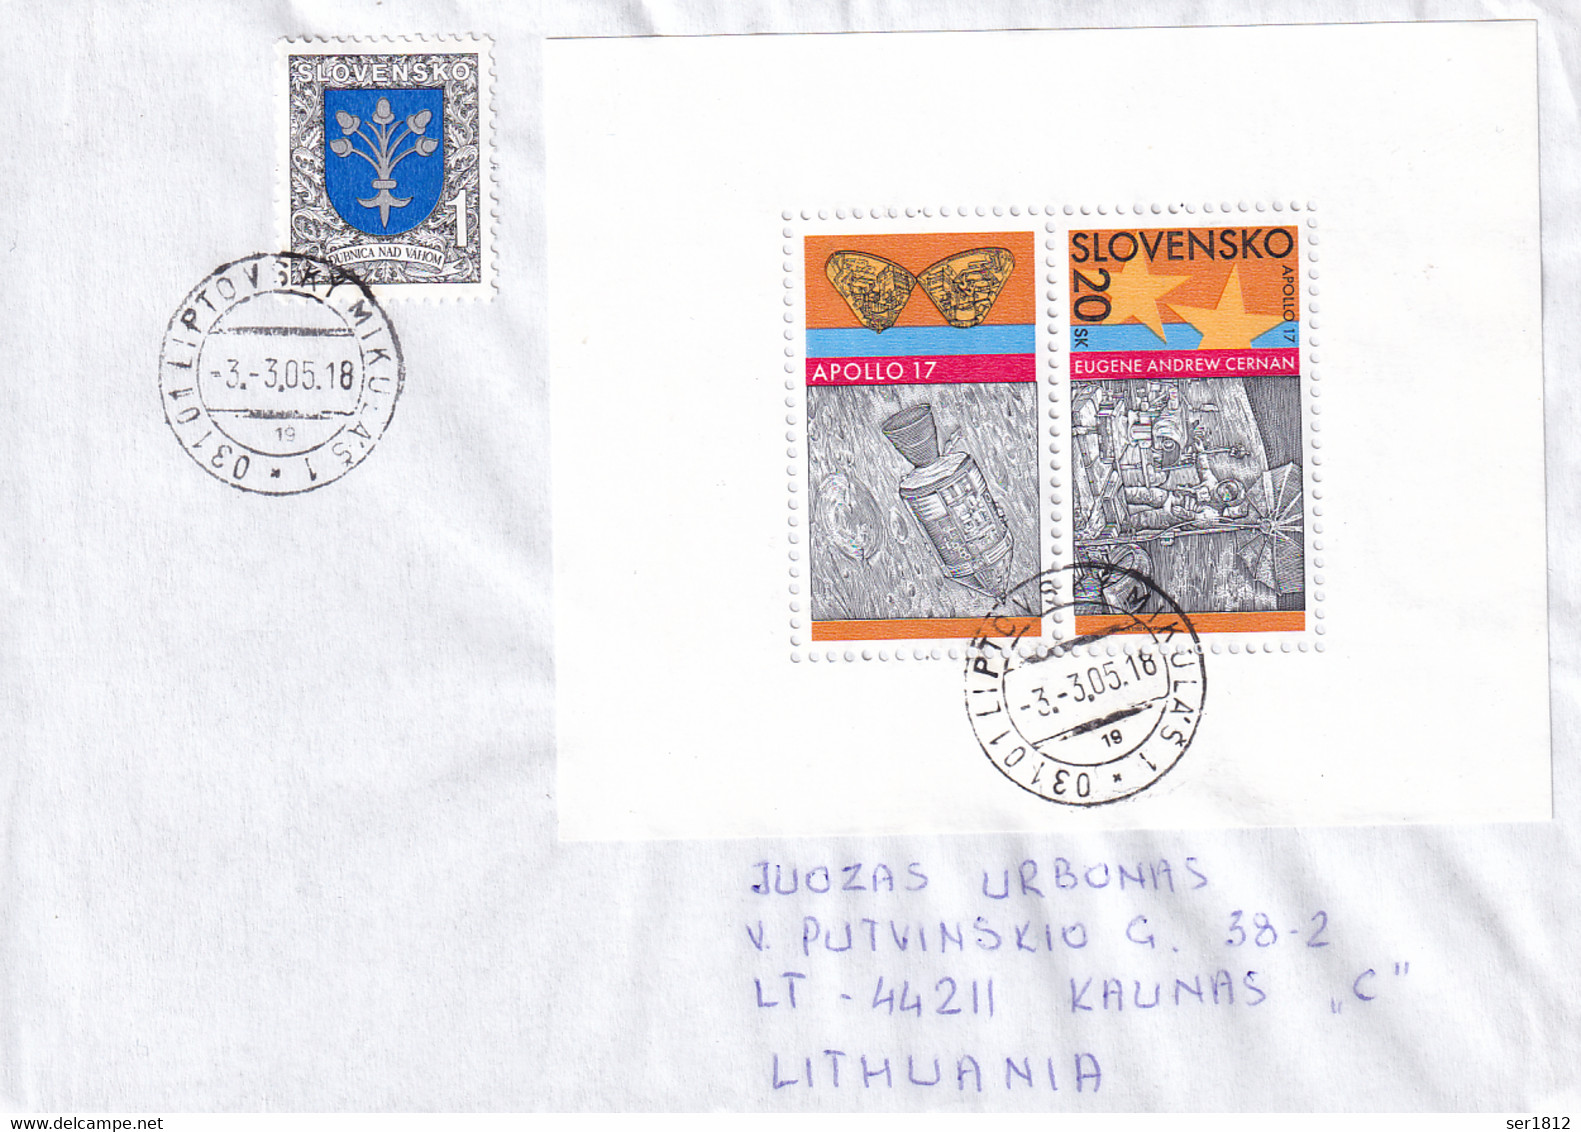 SLOVAKIA 2005 03 03 Space Cover From LIPTOVSKY MIKULAS To Kaunas Lithuania  30 Th Anniversary Of Last Apollo 17 Flight - Covers & Documents